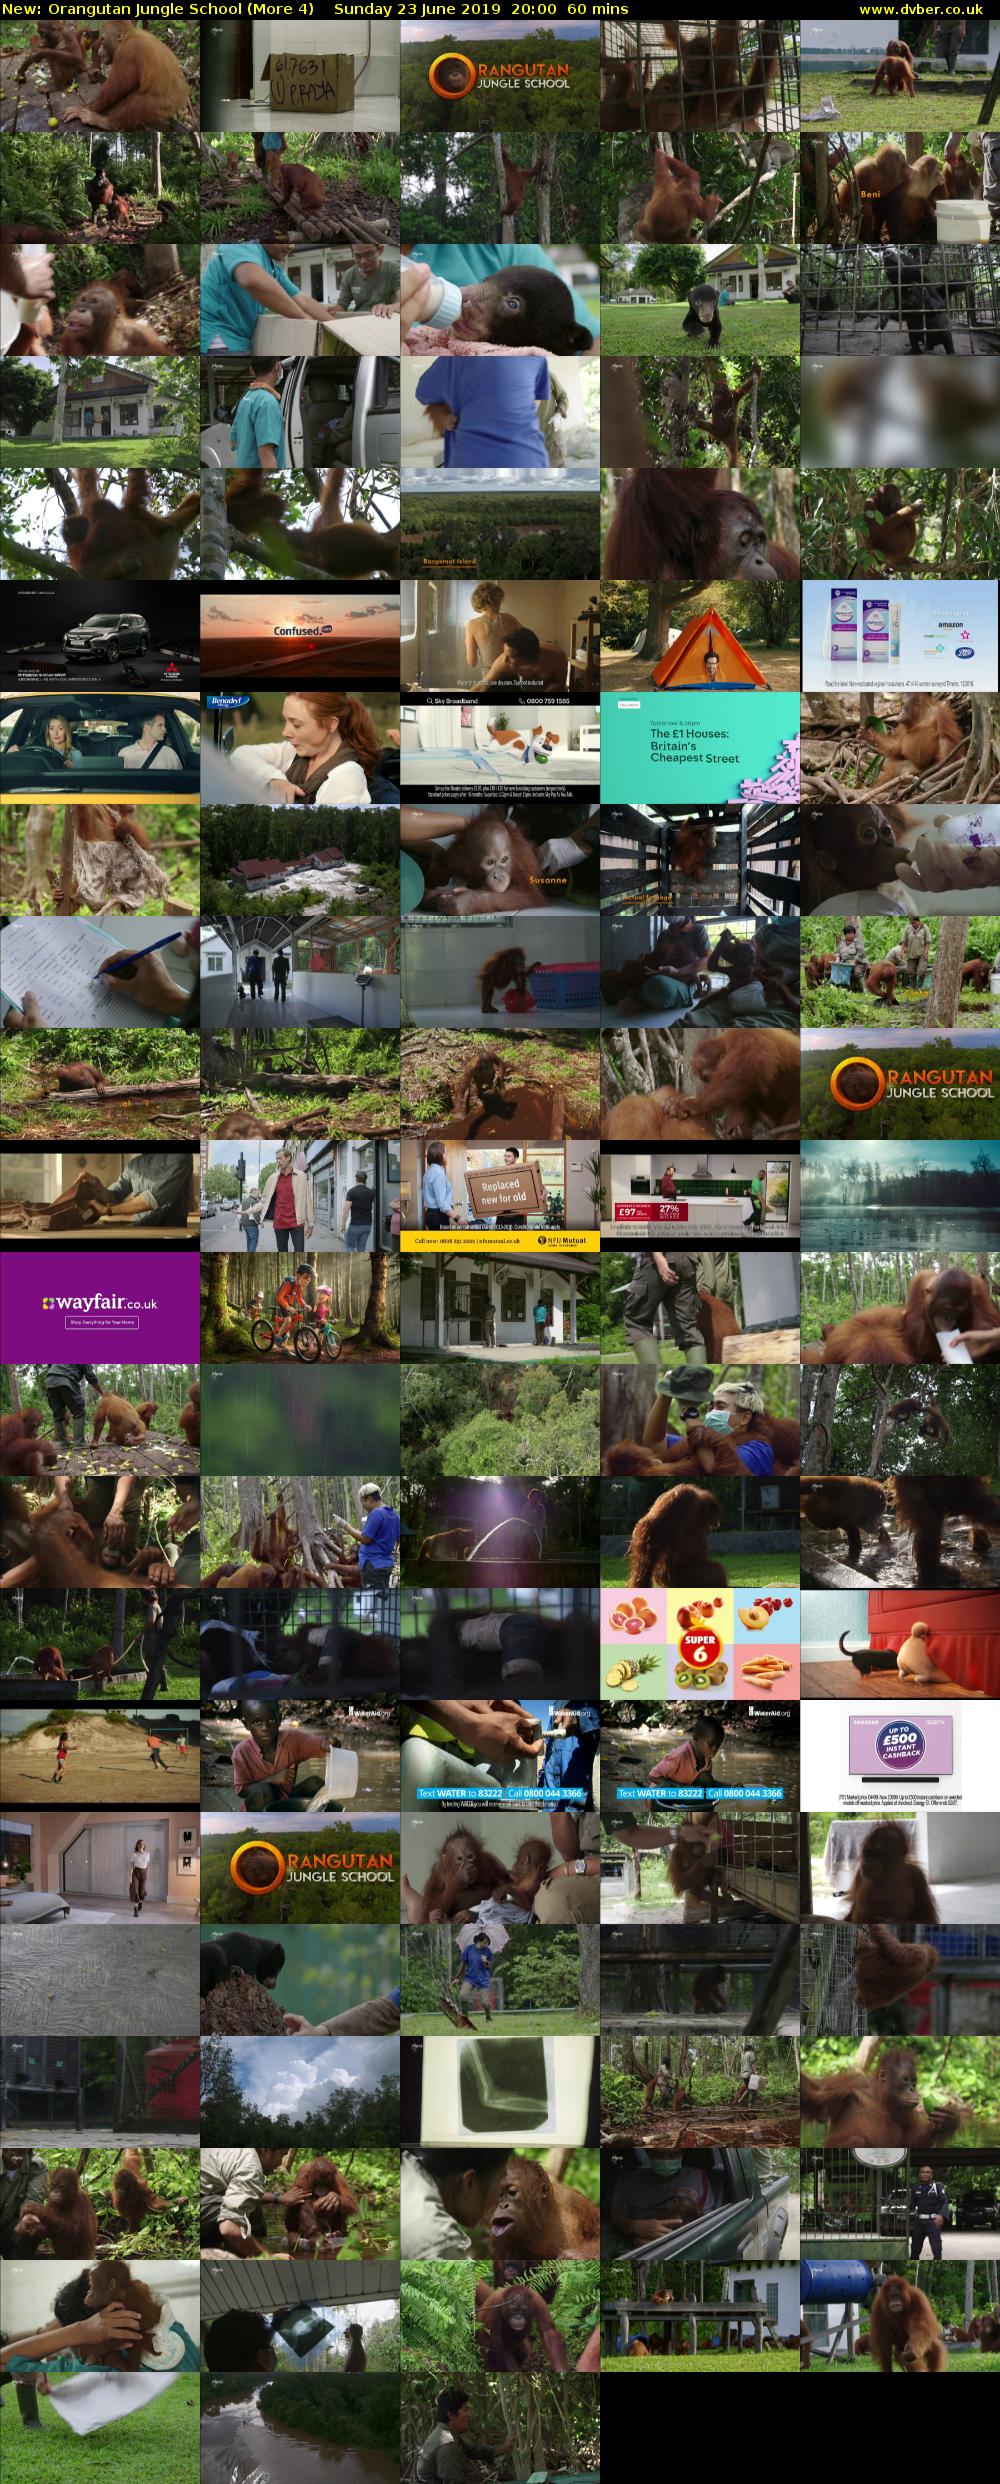 Orangutan Jungle School (More 4) Sunday 23 June 2019 20:00 - 21:00